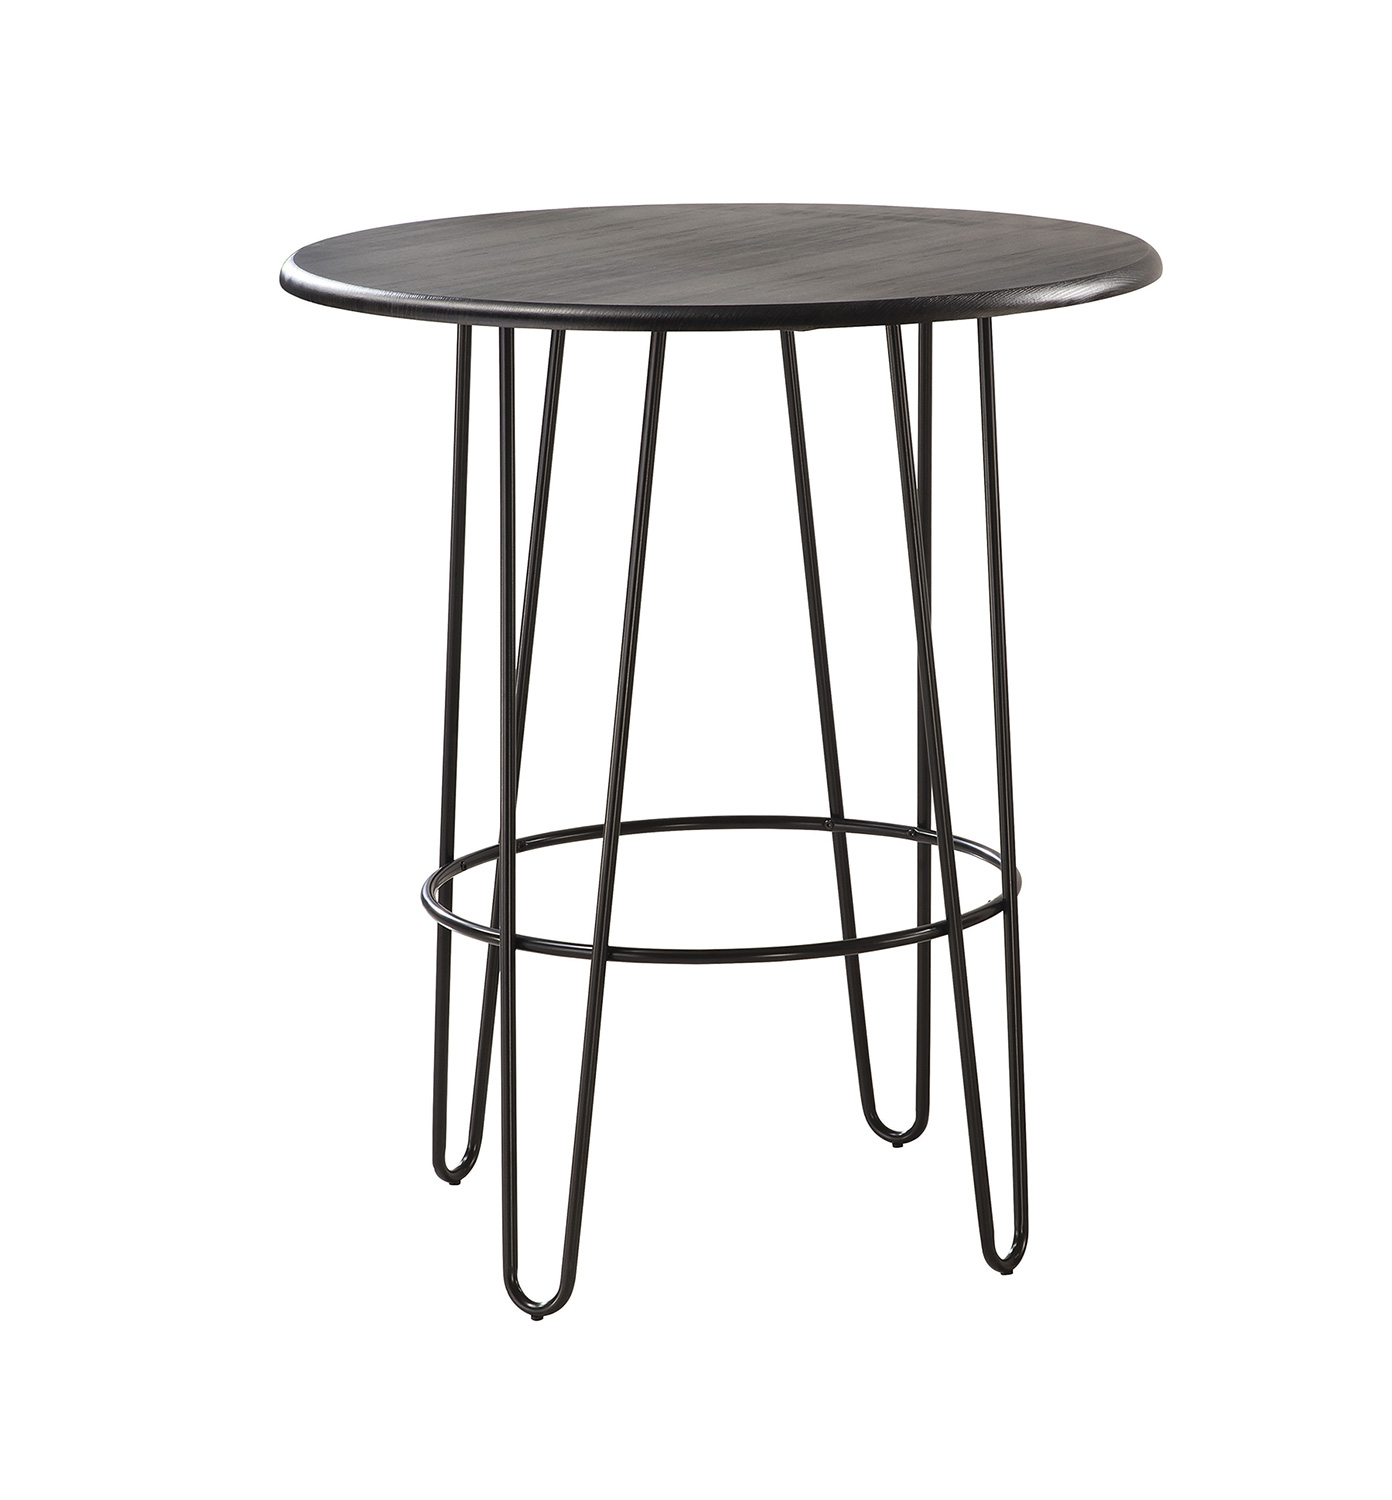 Coaster 101423 Round Bar Table - Dark Cappuccino Wood/Black Metal